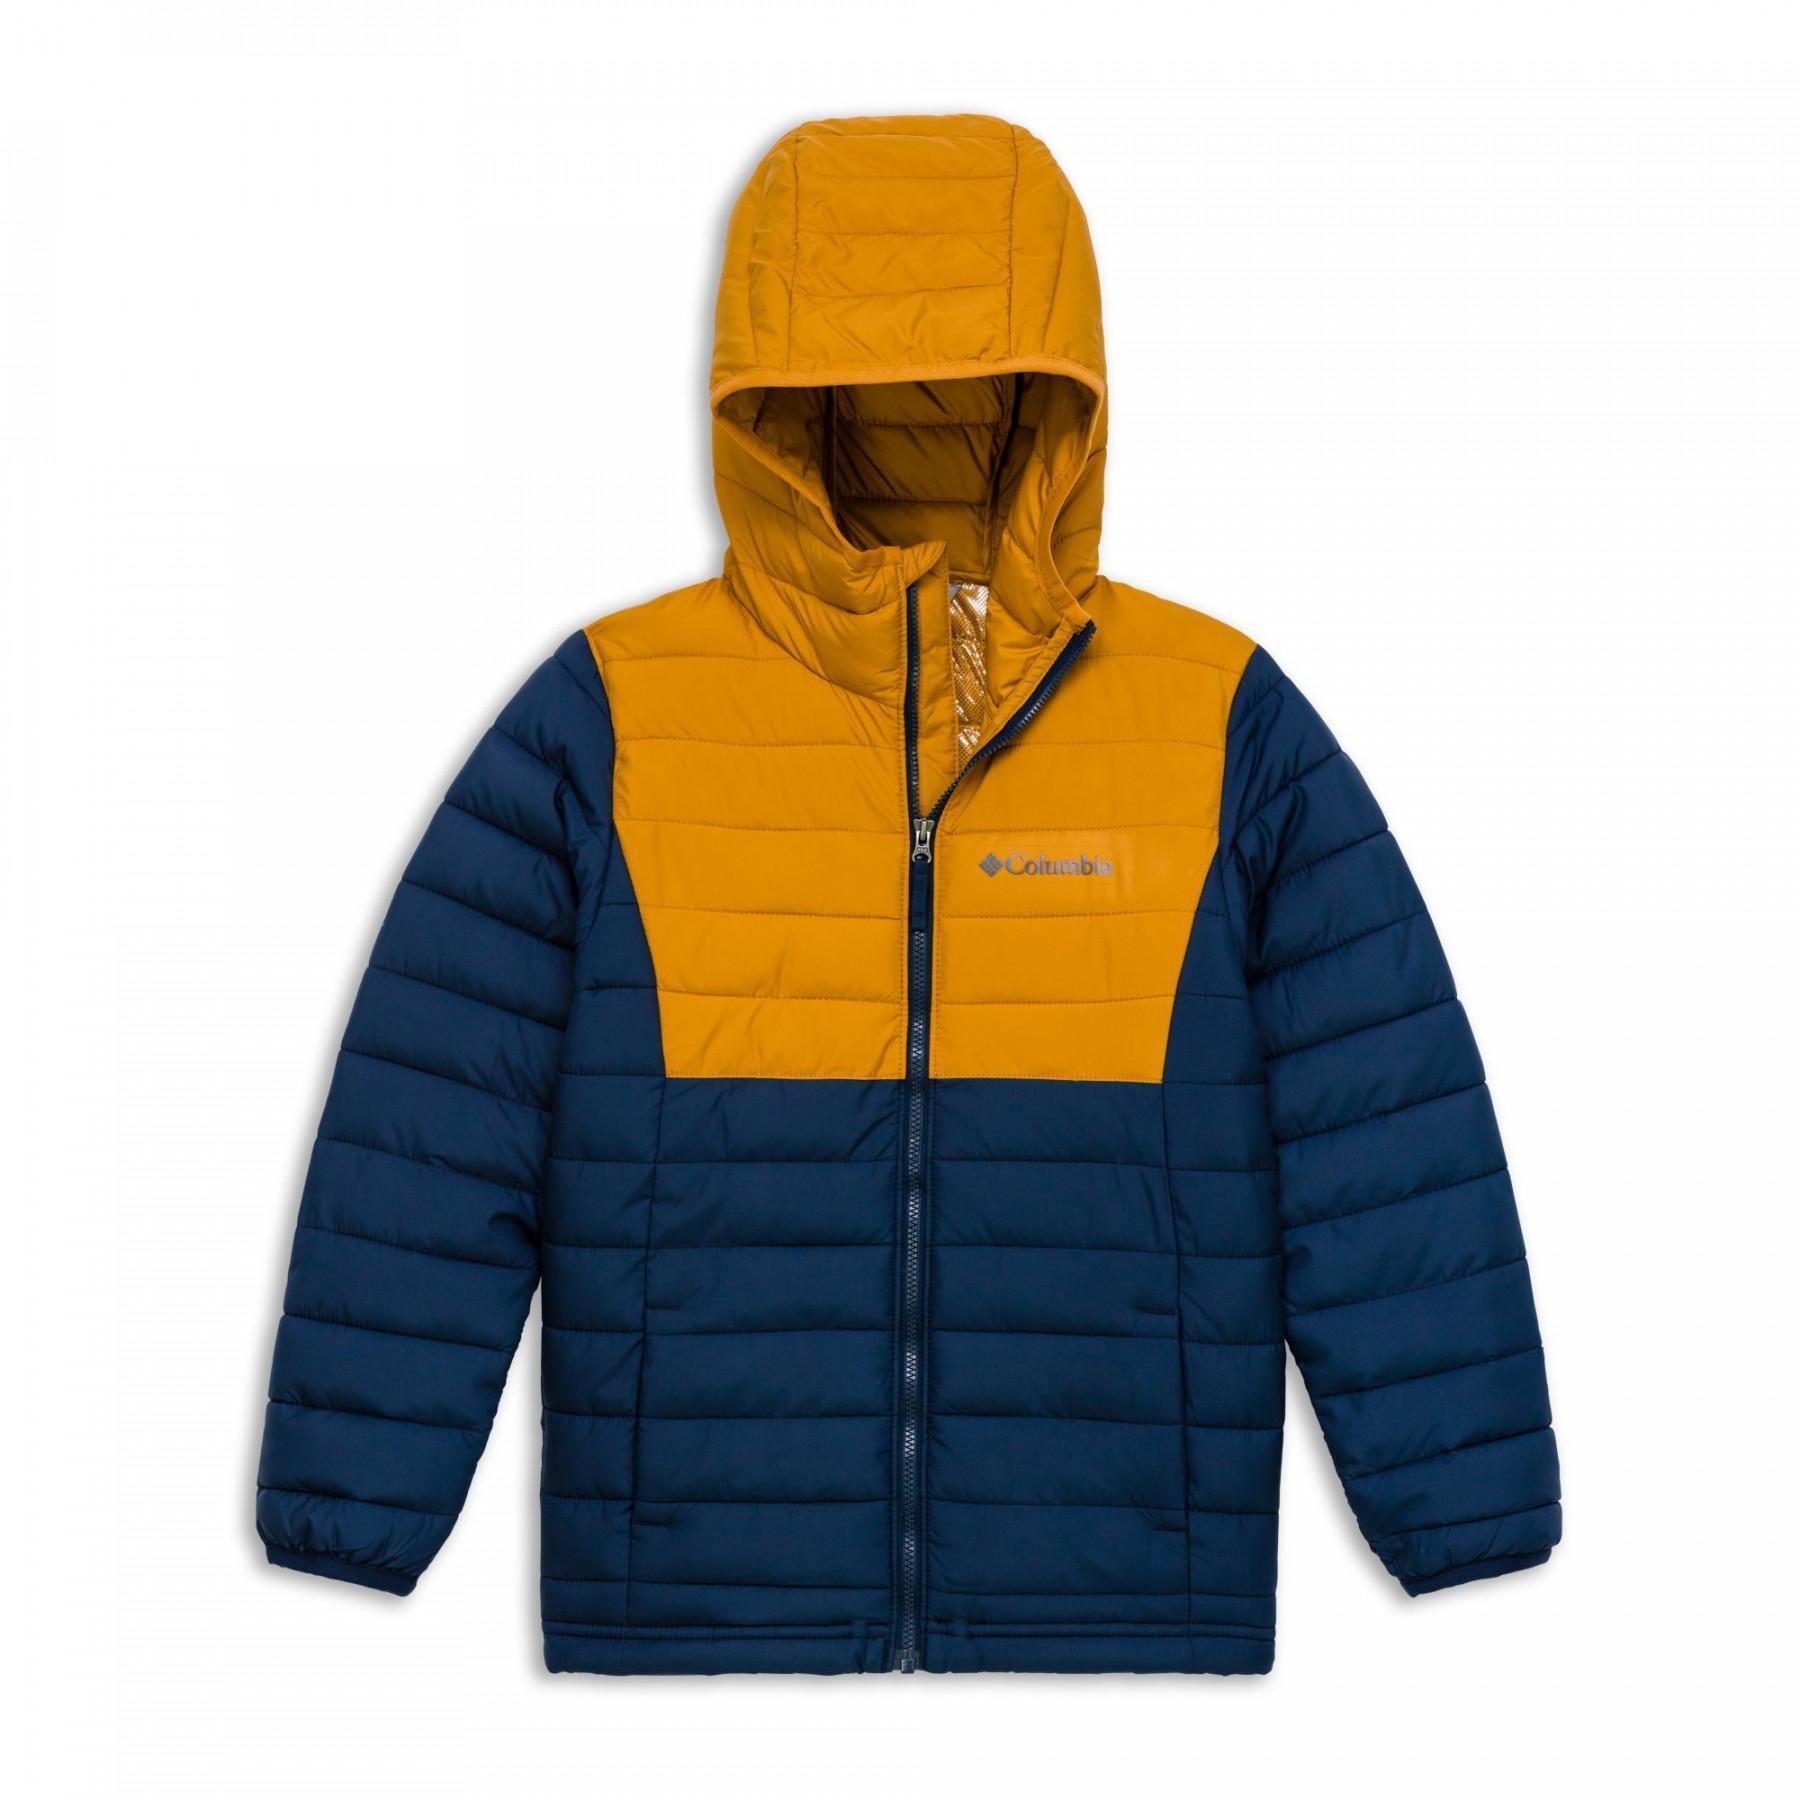 Children's hooded jacket Columbia Powder Lite